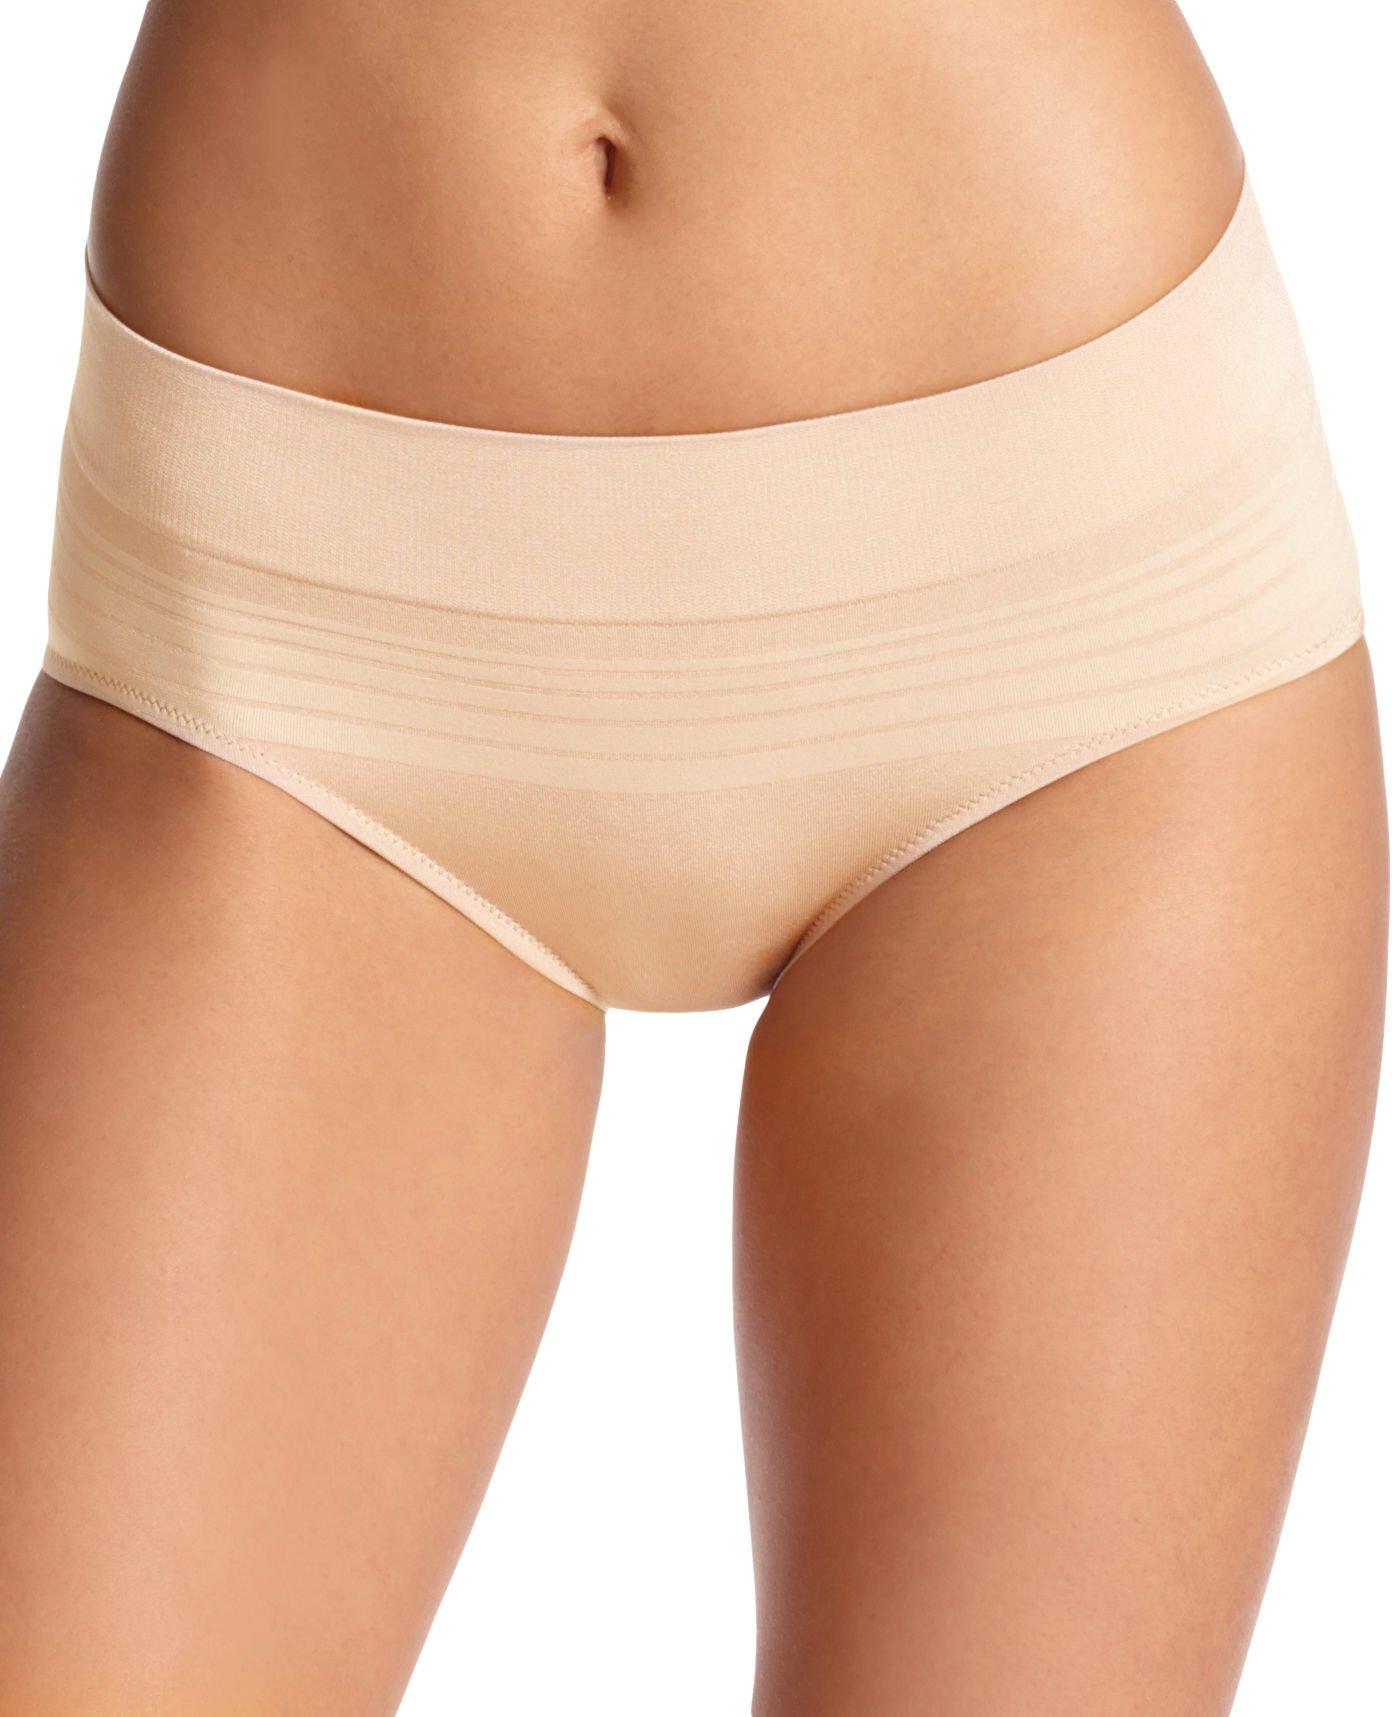 Warner's Spandex Panties for Women